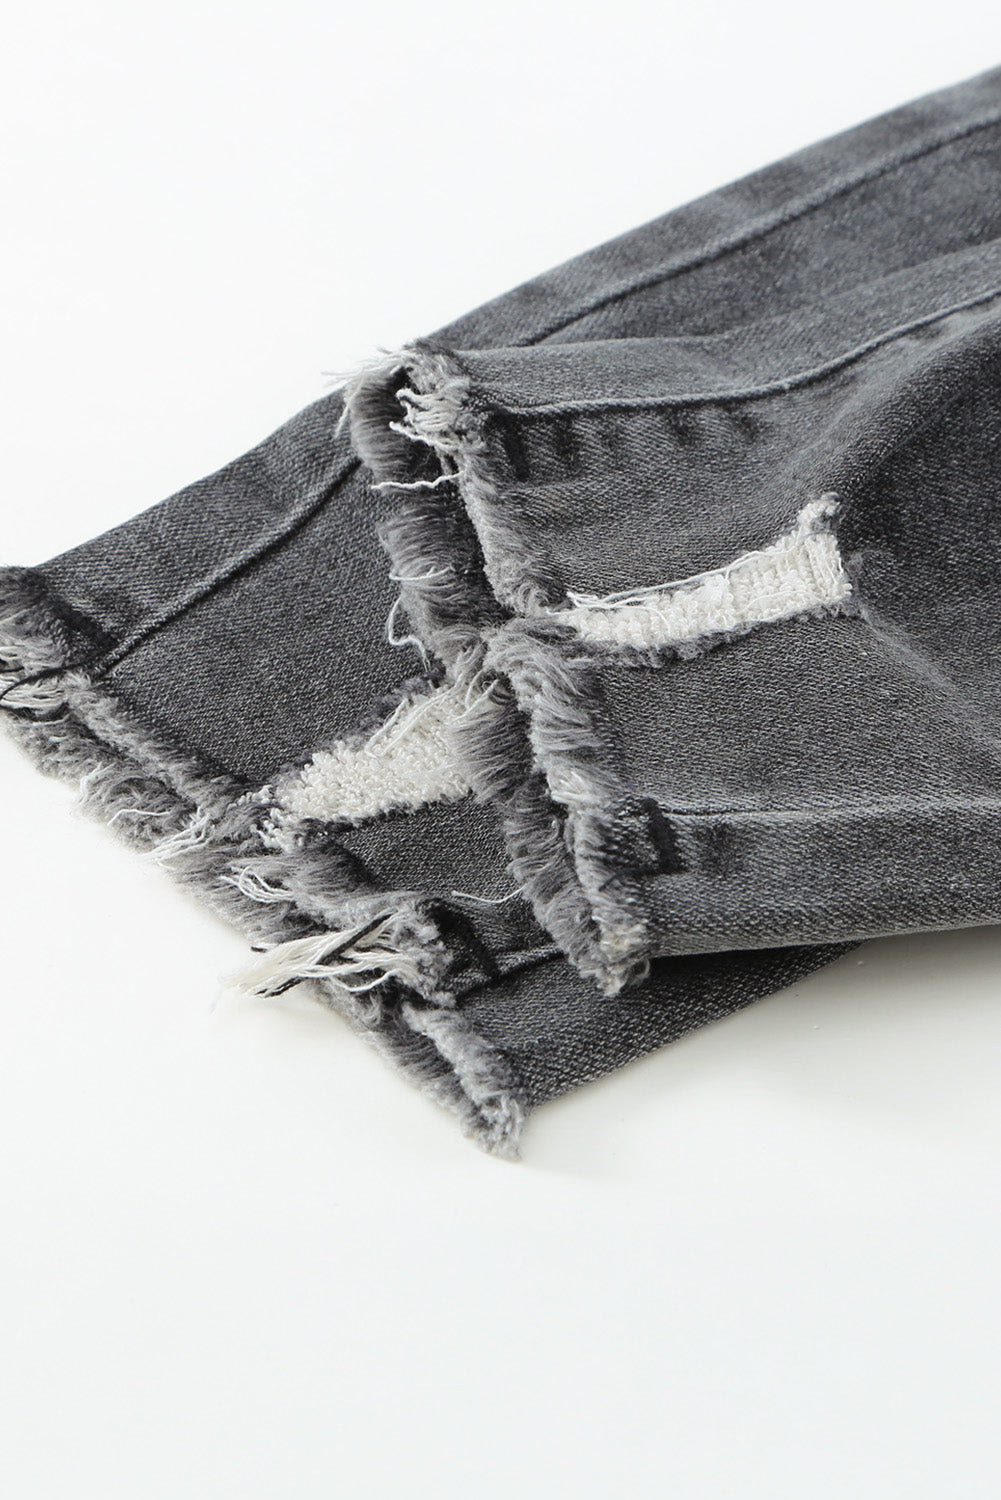 Gray Drawstring Elastic Waist Hole Ripped Jeans Jeans JT's Designer Fashion